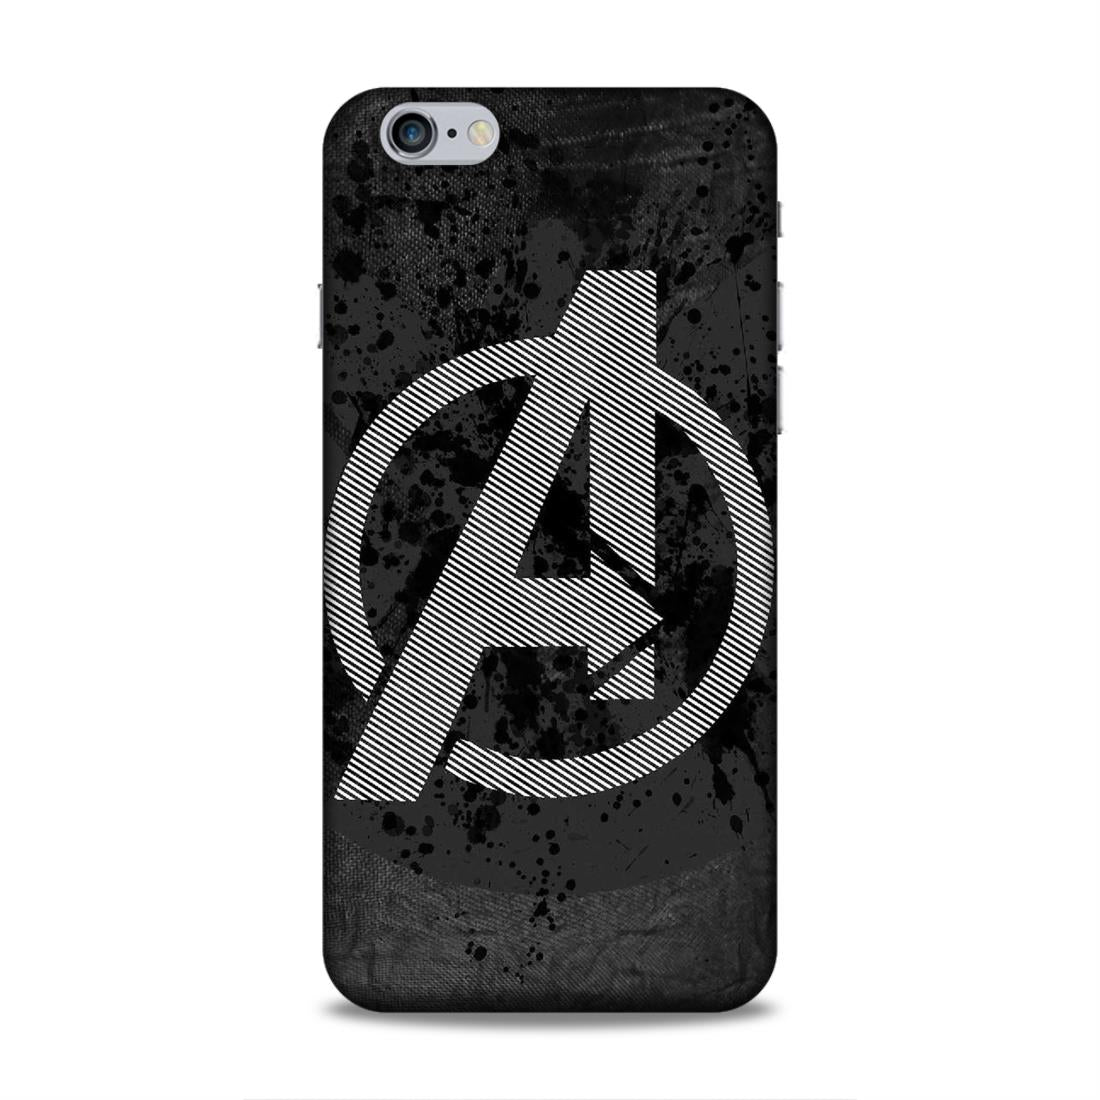 Avengers Symbol Hard Back Case For Apple iPhone 6 Plus / 6s Plus